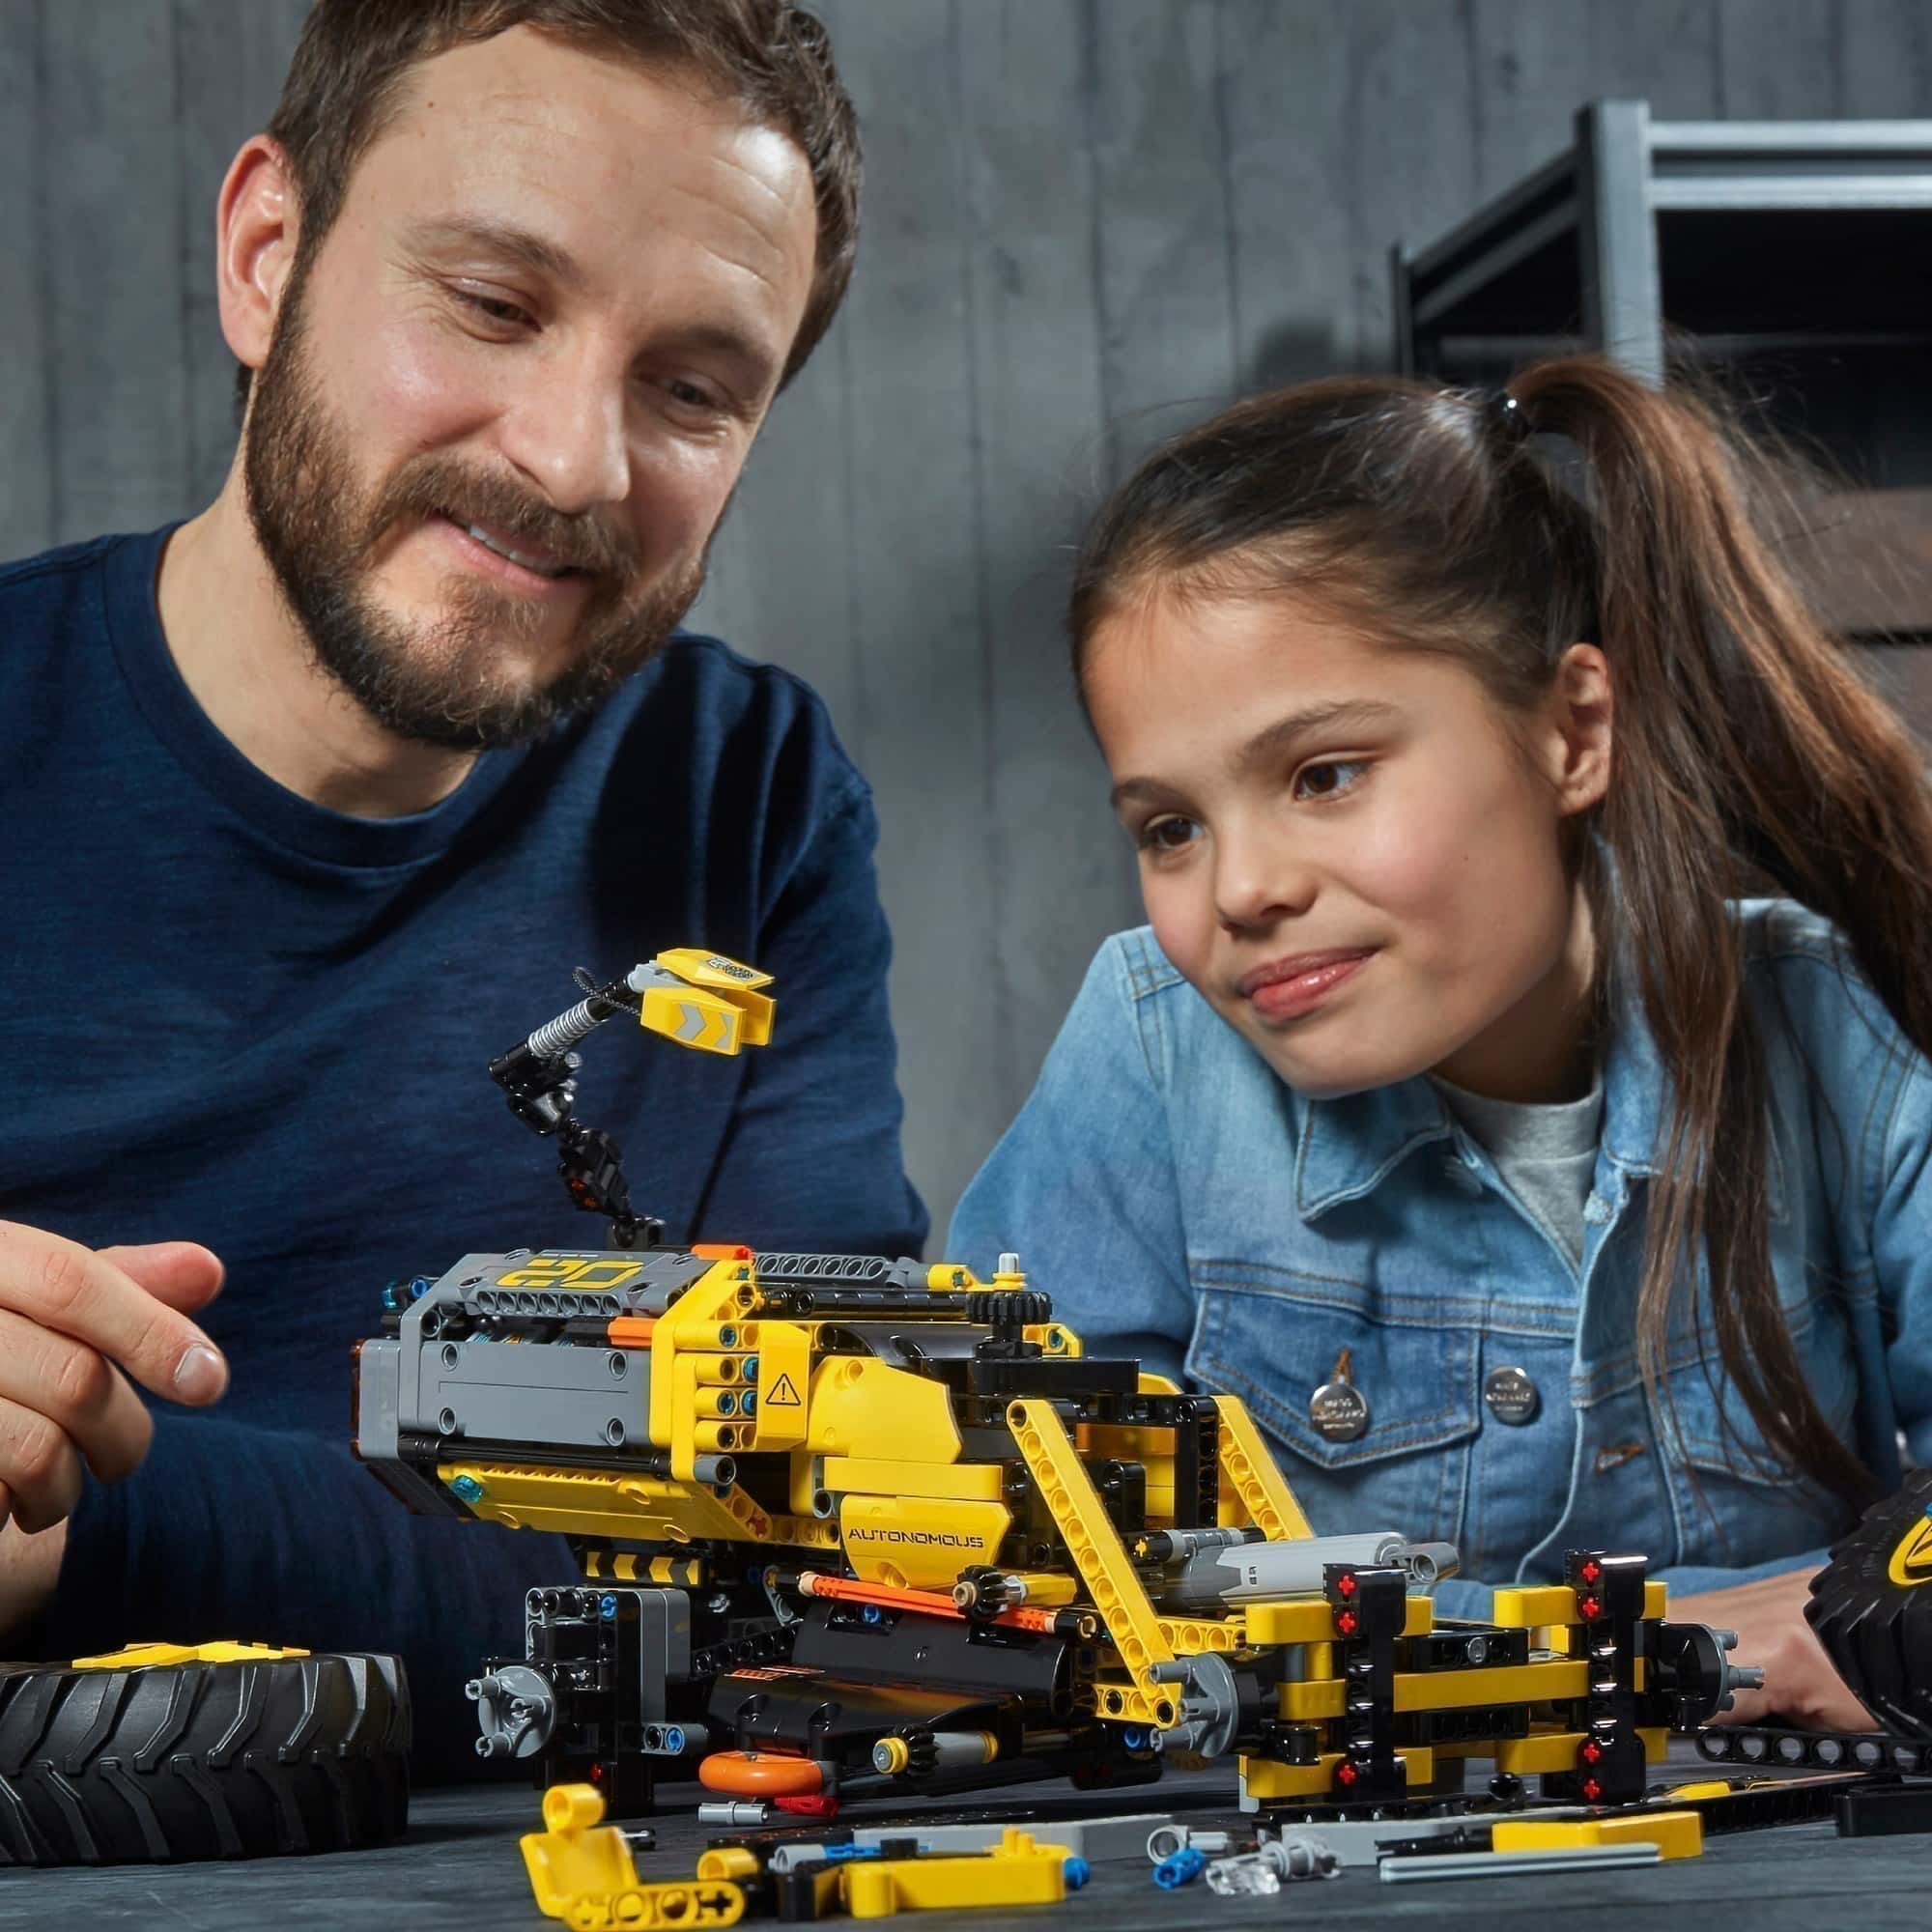 LEGO® Technic™ 42081 - Volvo Concept Wheel Loader ZEUX